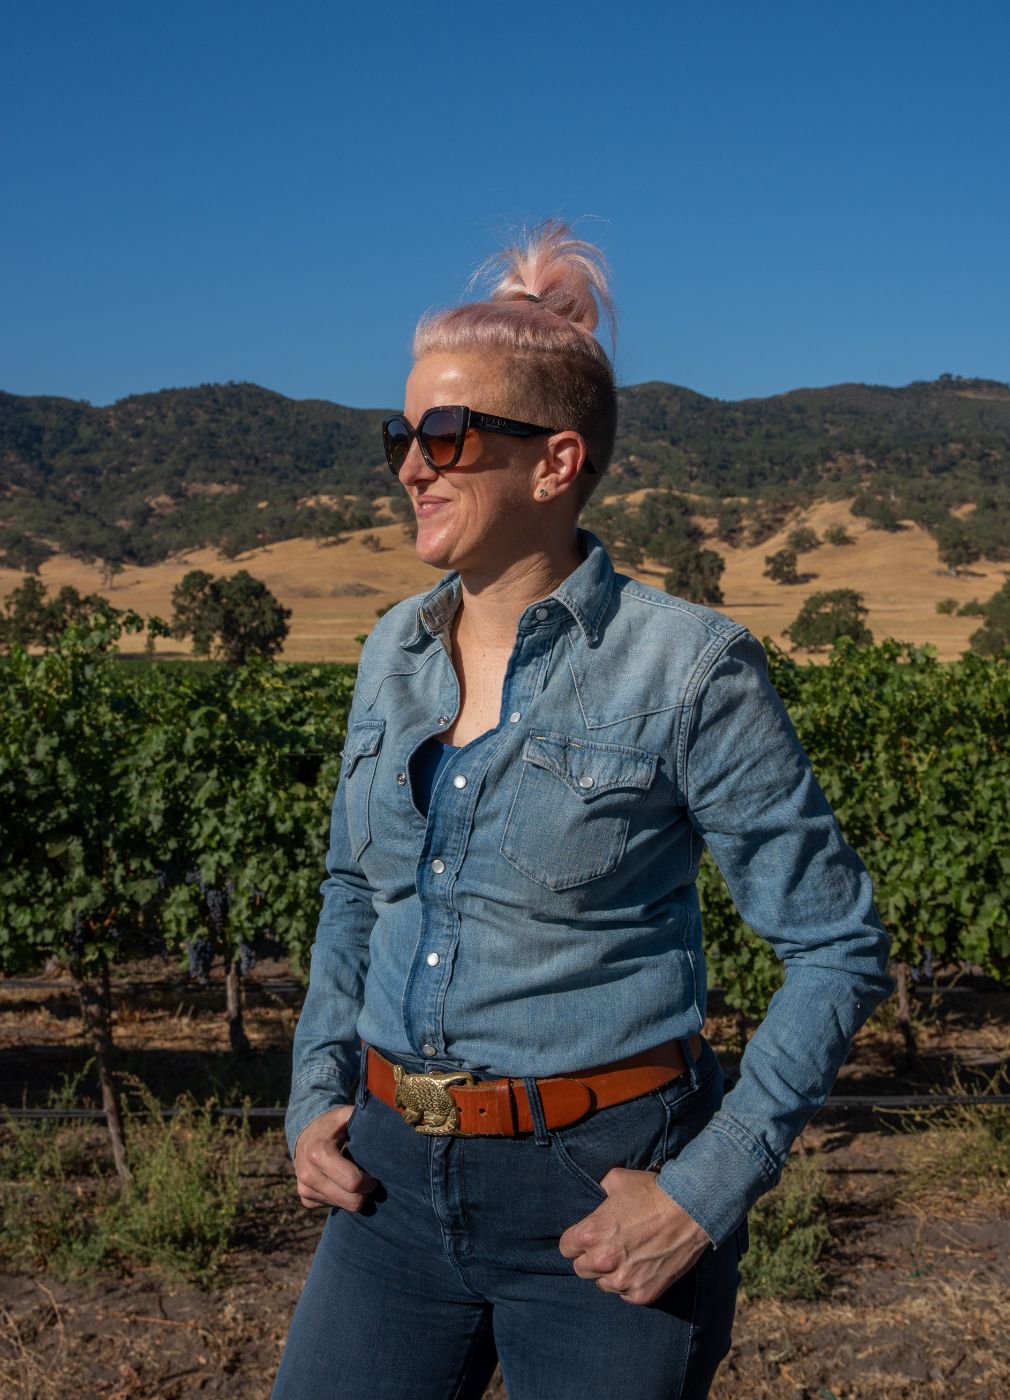 Meet Bezel Winemaker Jane Dunkley